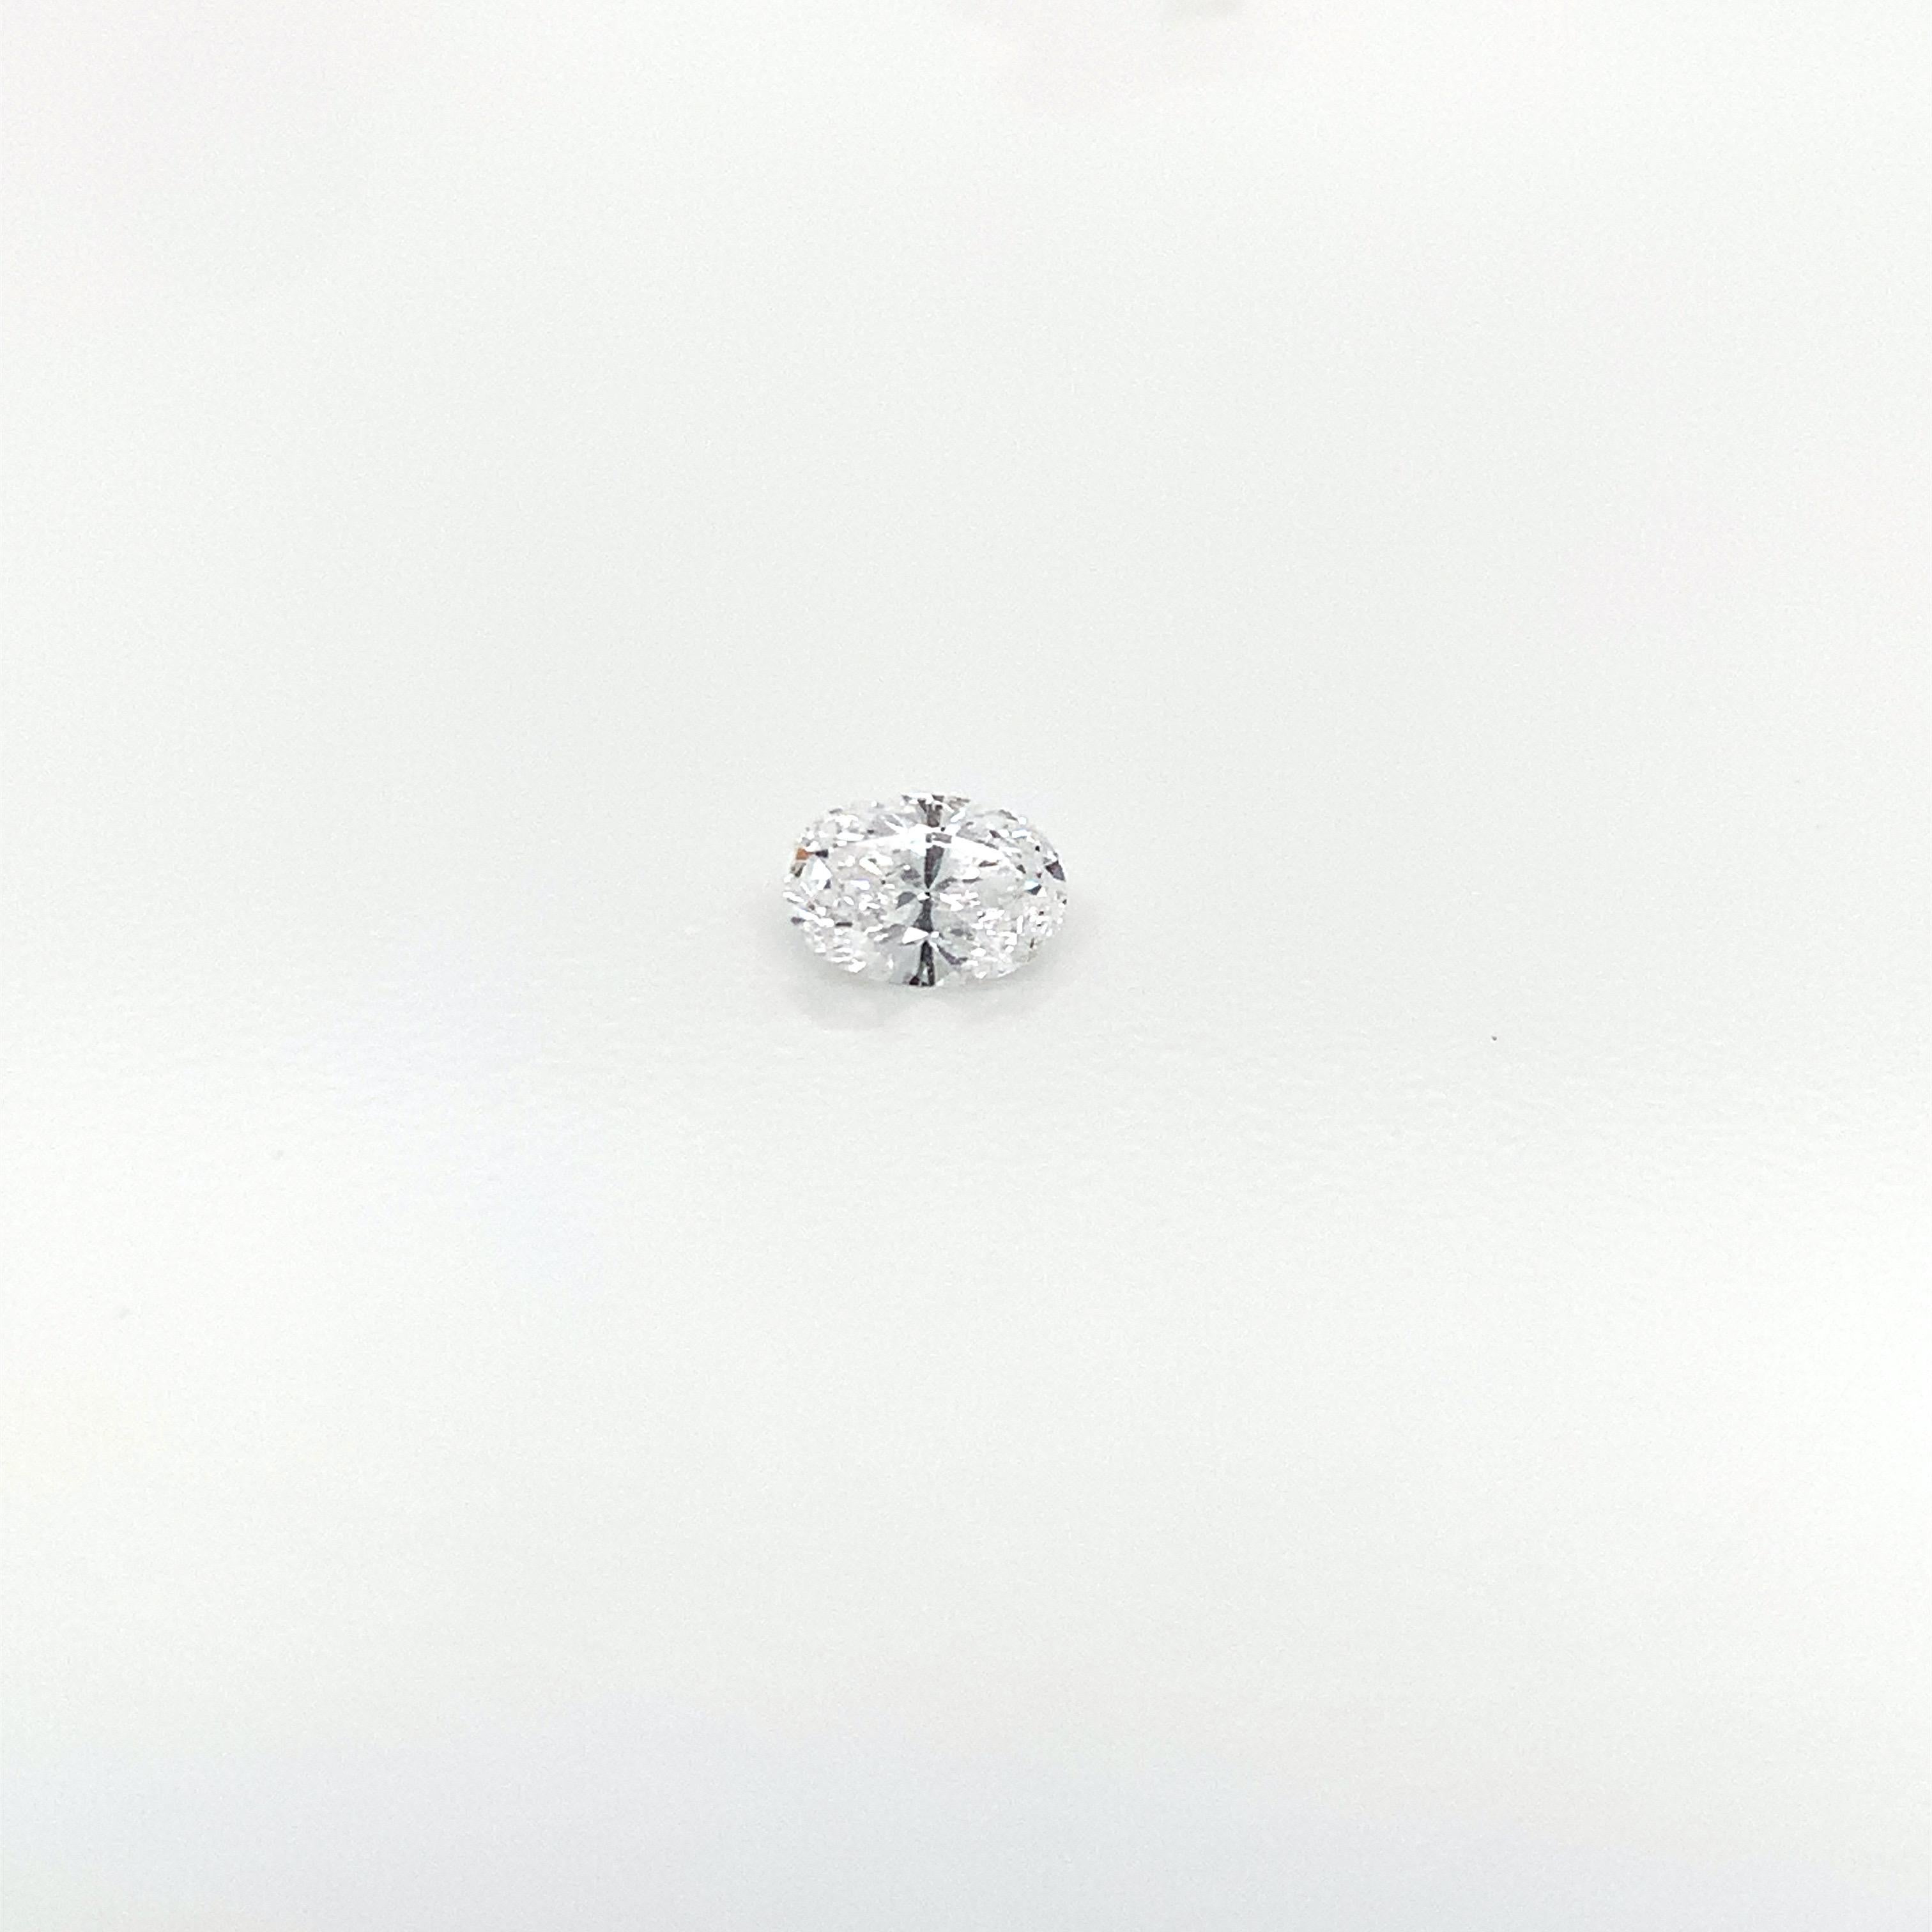 Oval Cut GIA Certified 0.40 Carat Oval Brilliant Diamond For Sale